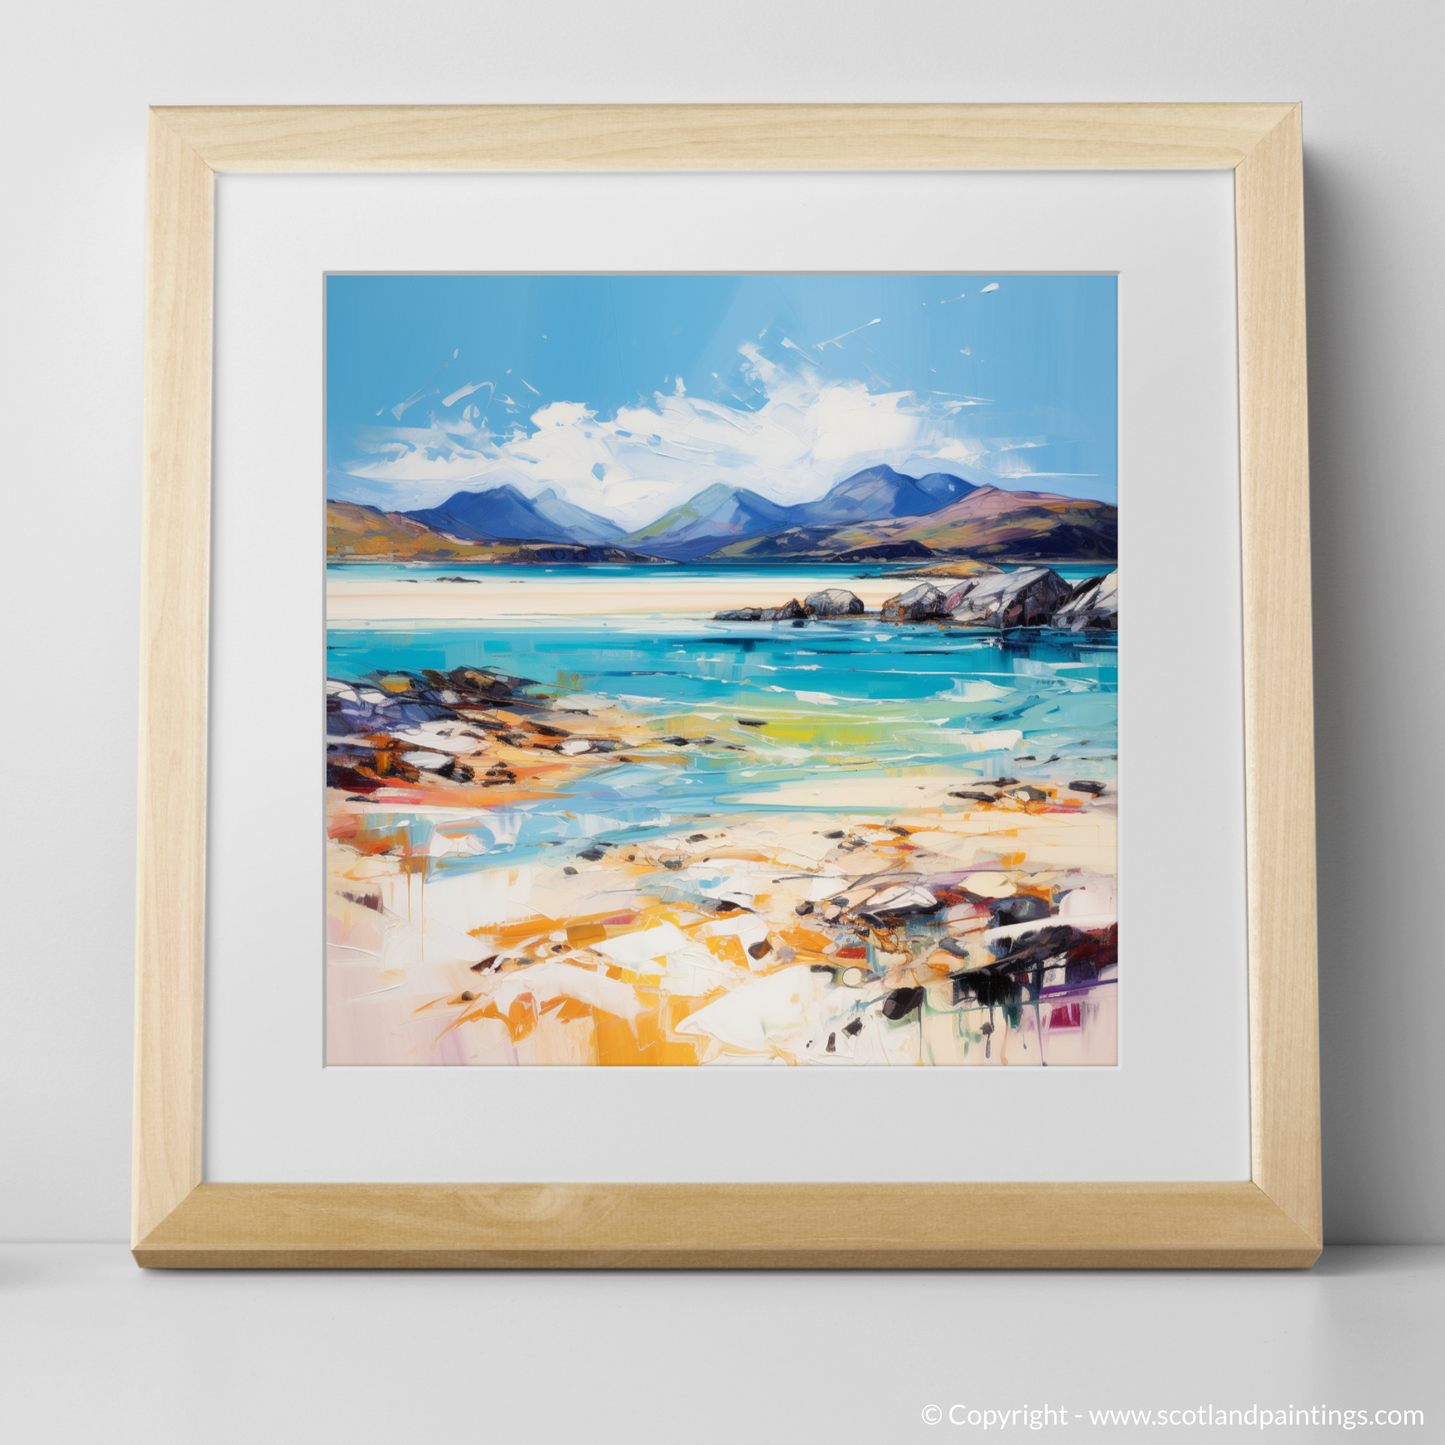 Art Print of Seilebost Beach, Isle of Harris with a natural frame